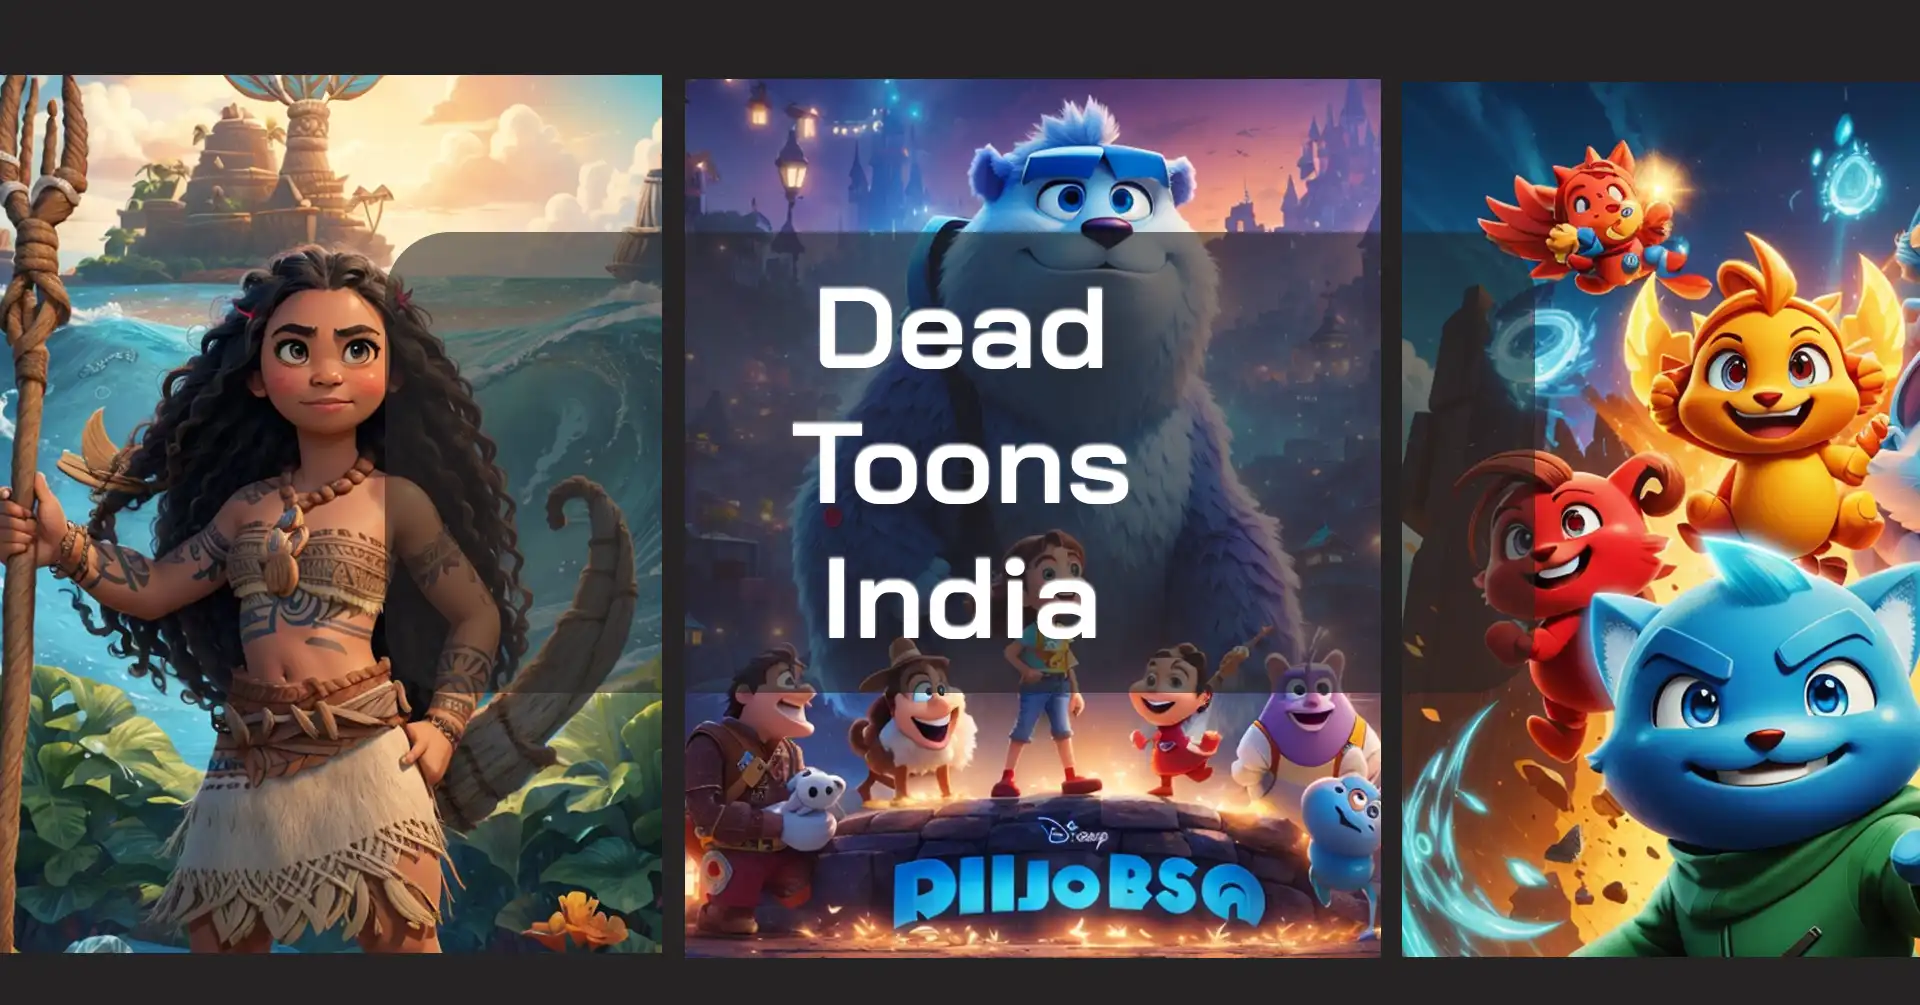 DeadtoonsIndia